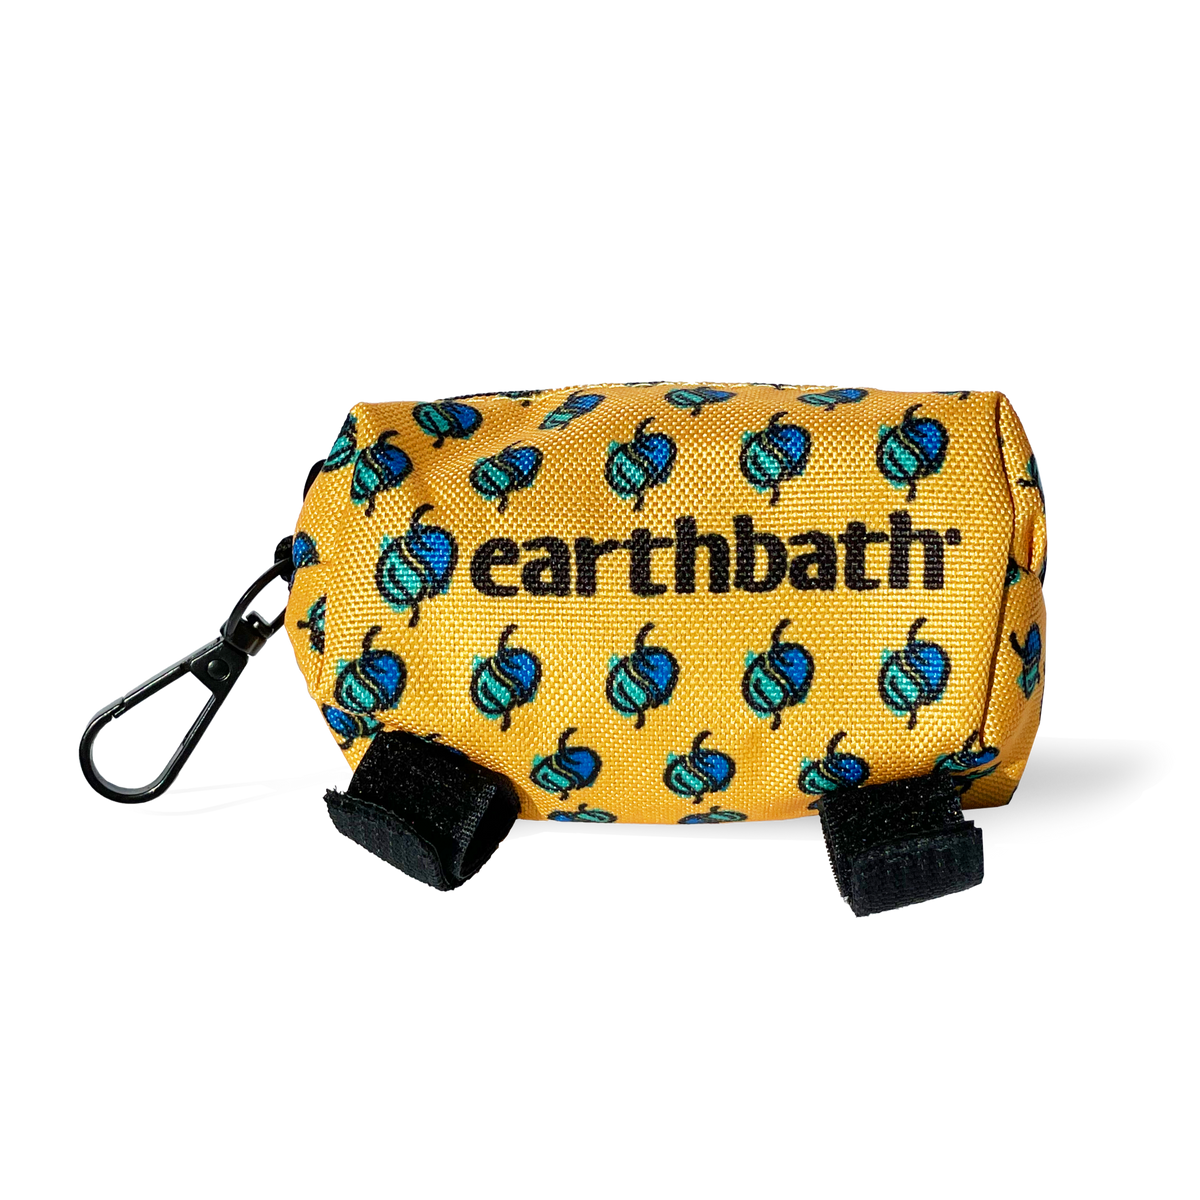 earthbath® Waste Bag Holder